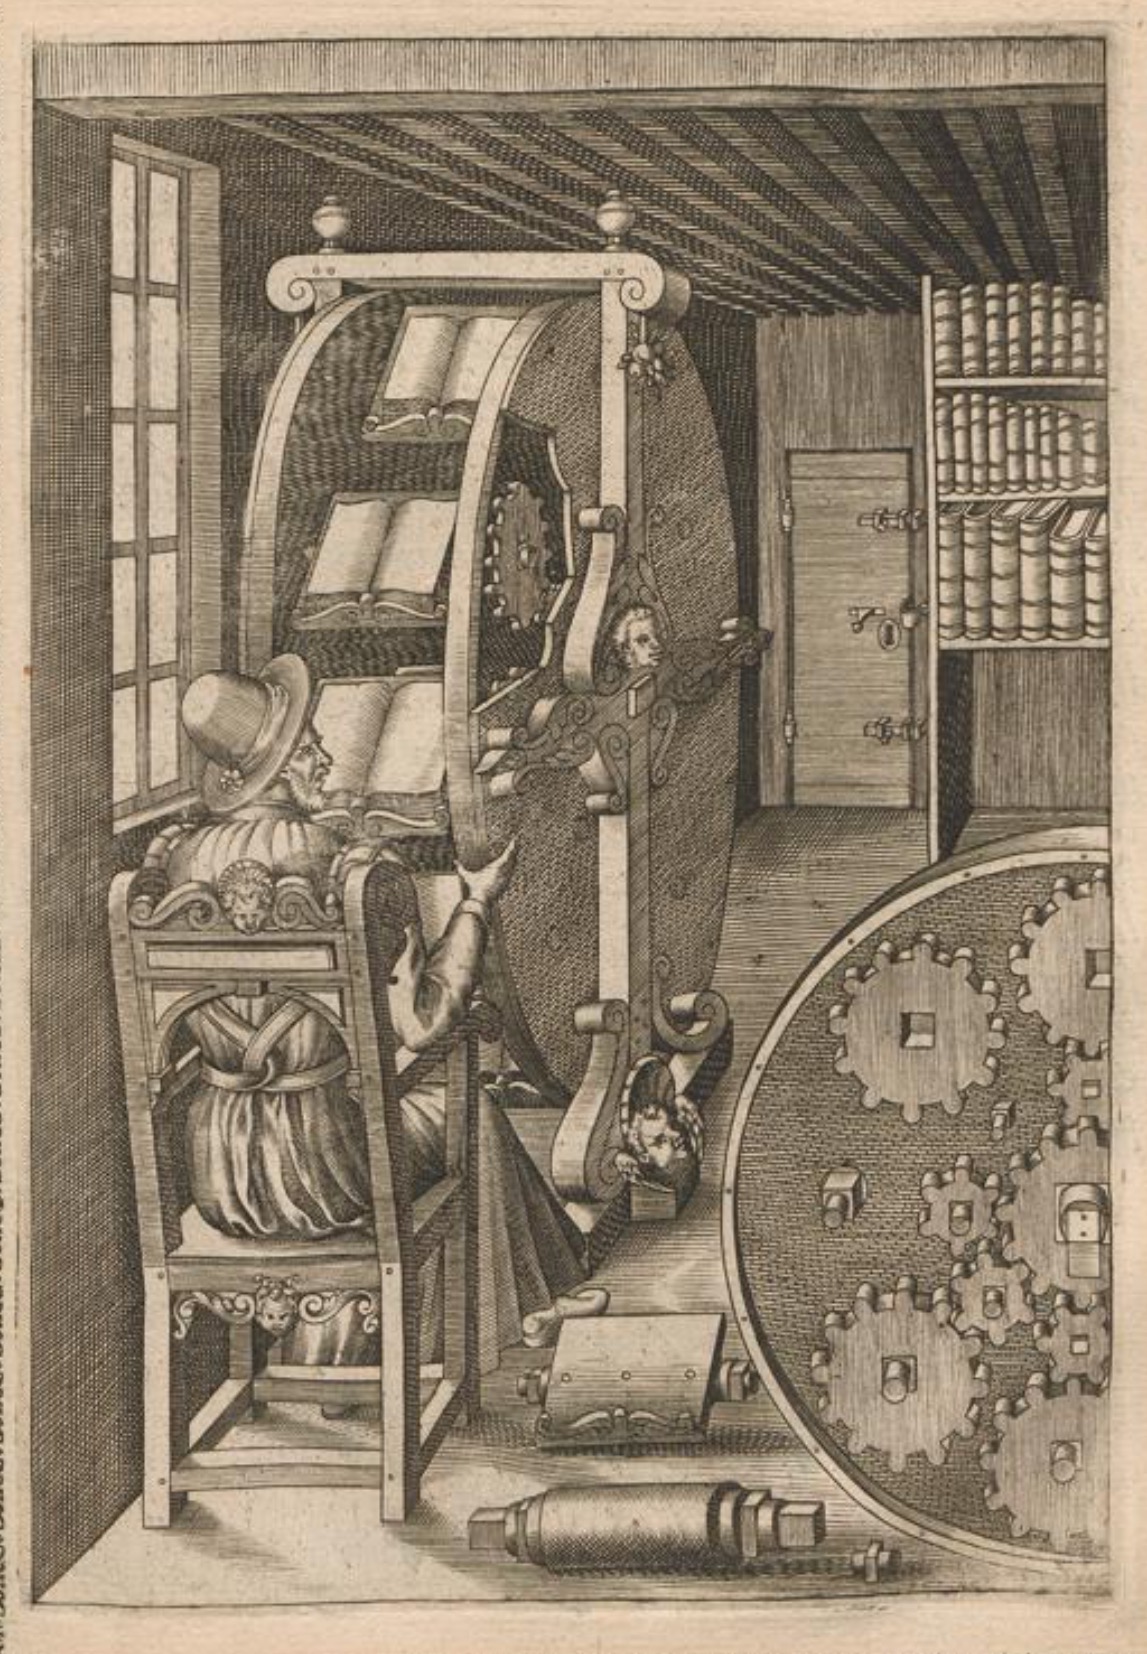 Agostino Ramelli's 16th-century book wheel